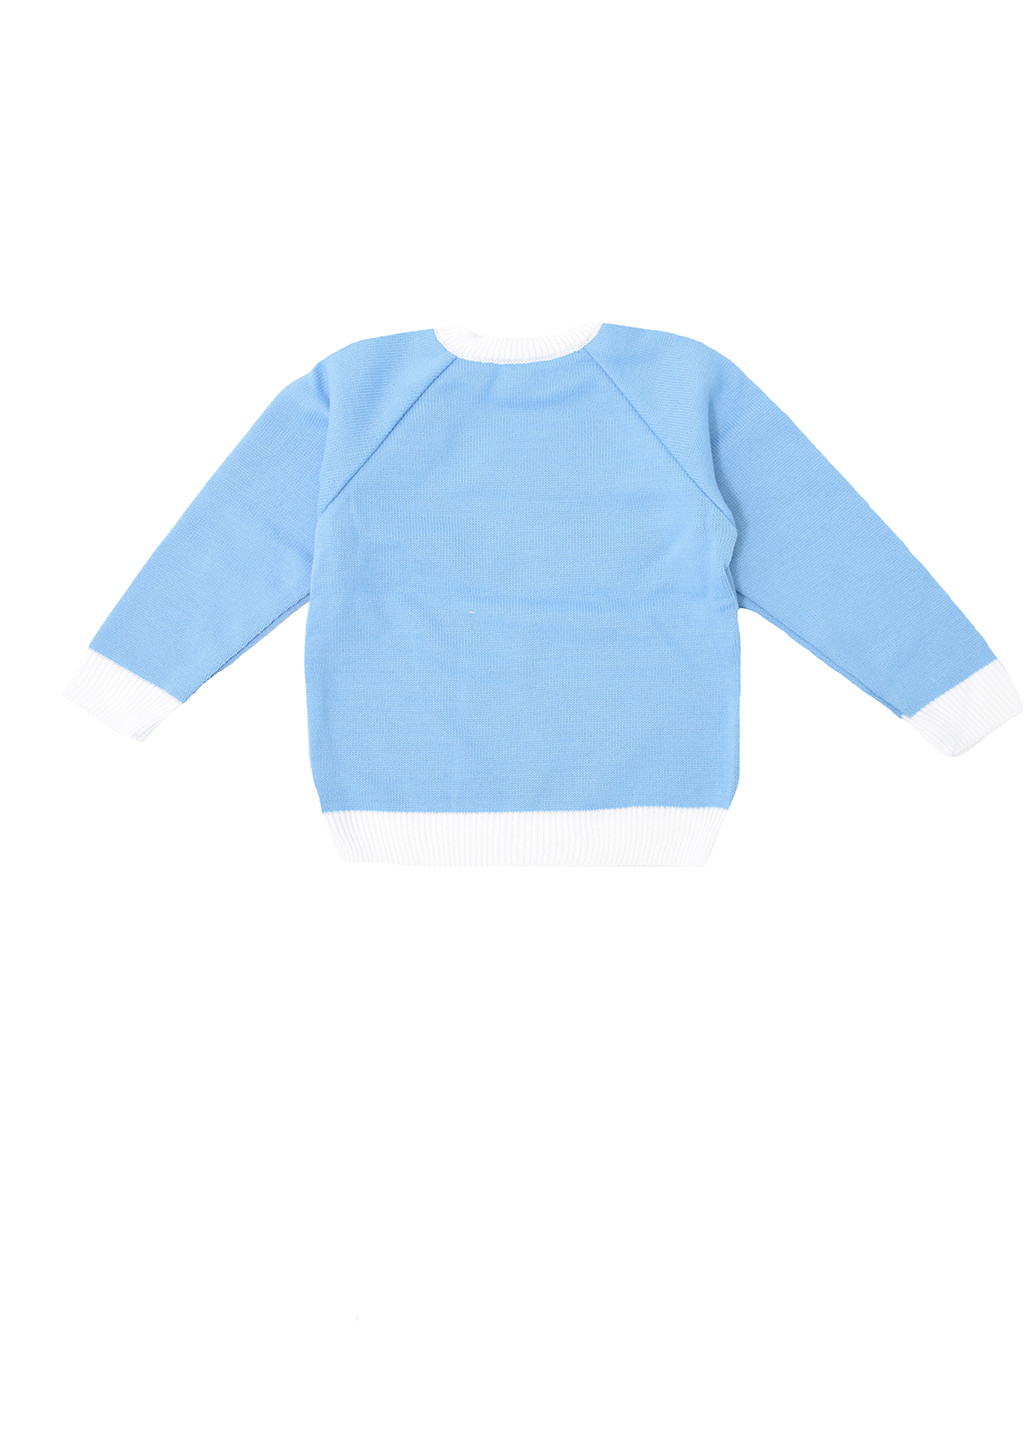 Голубой демисезонный джемпер джемпер Mari-Knit